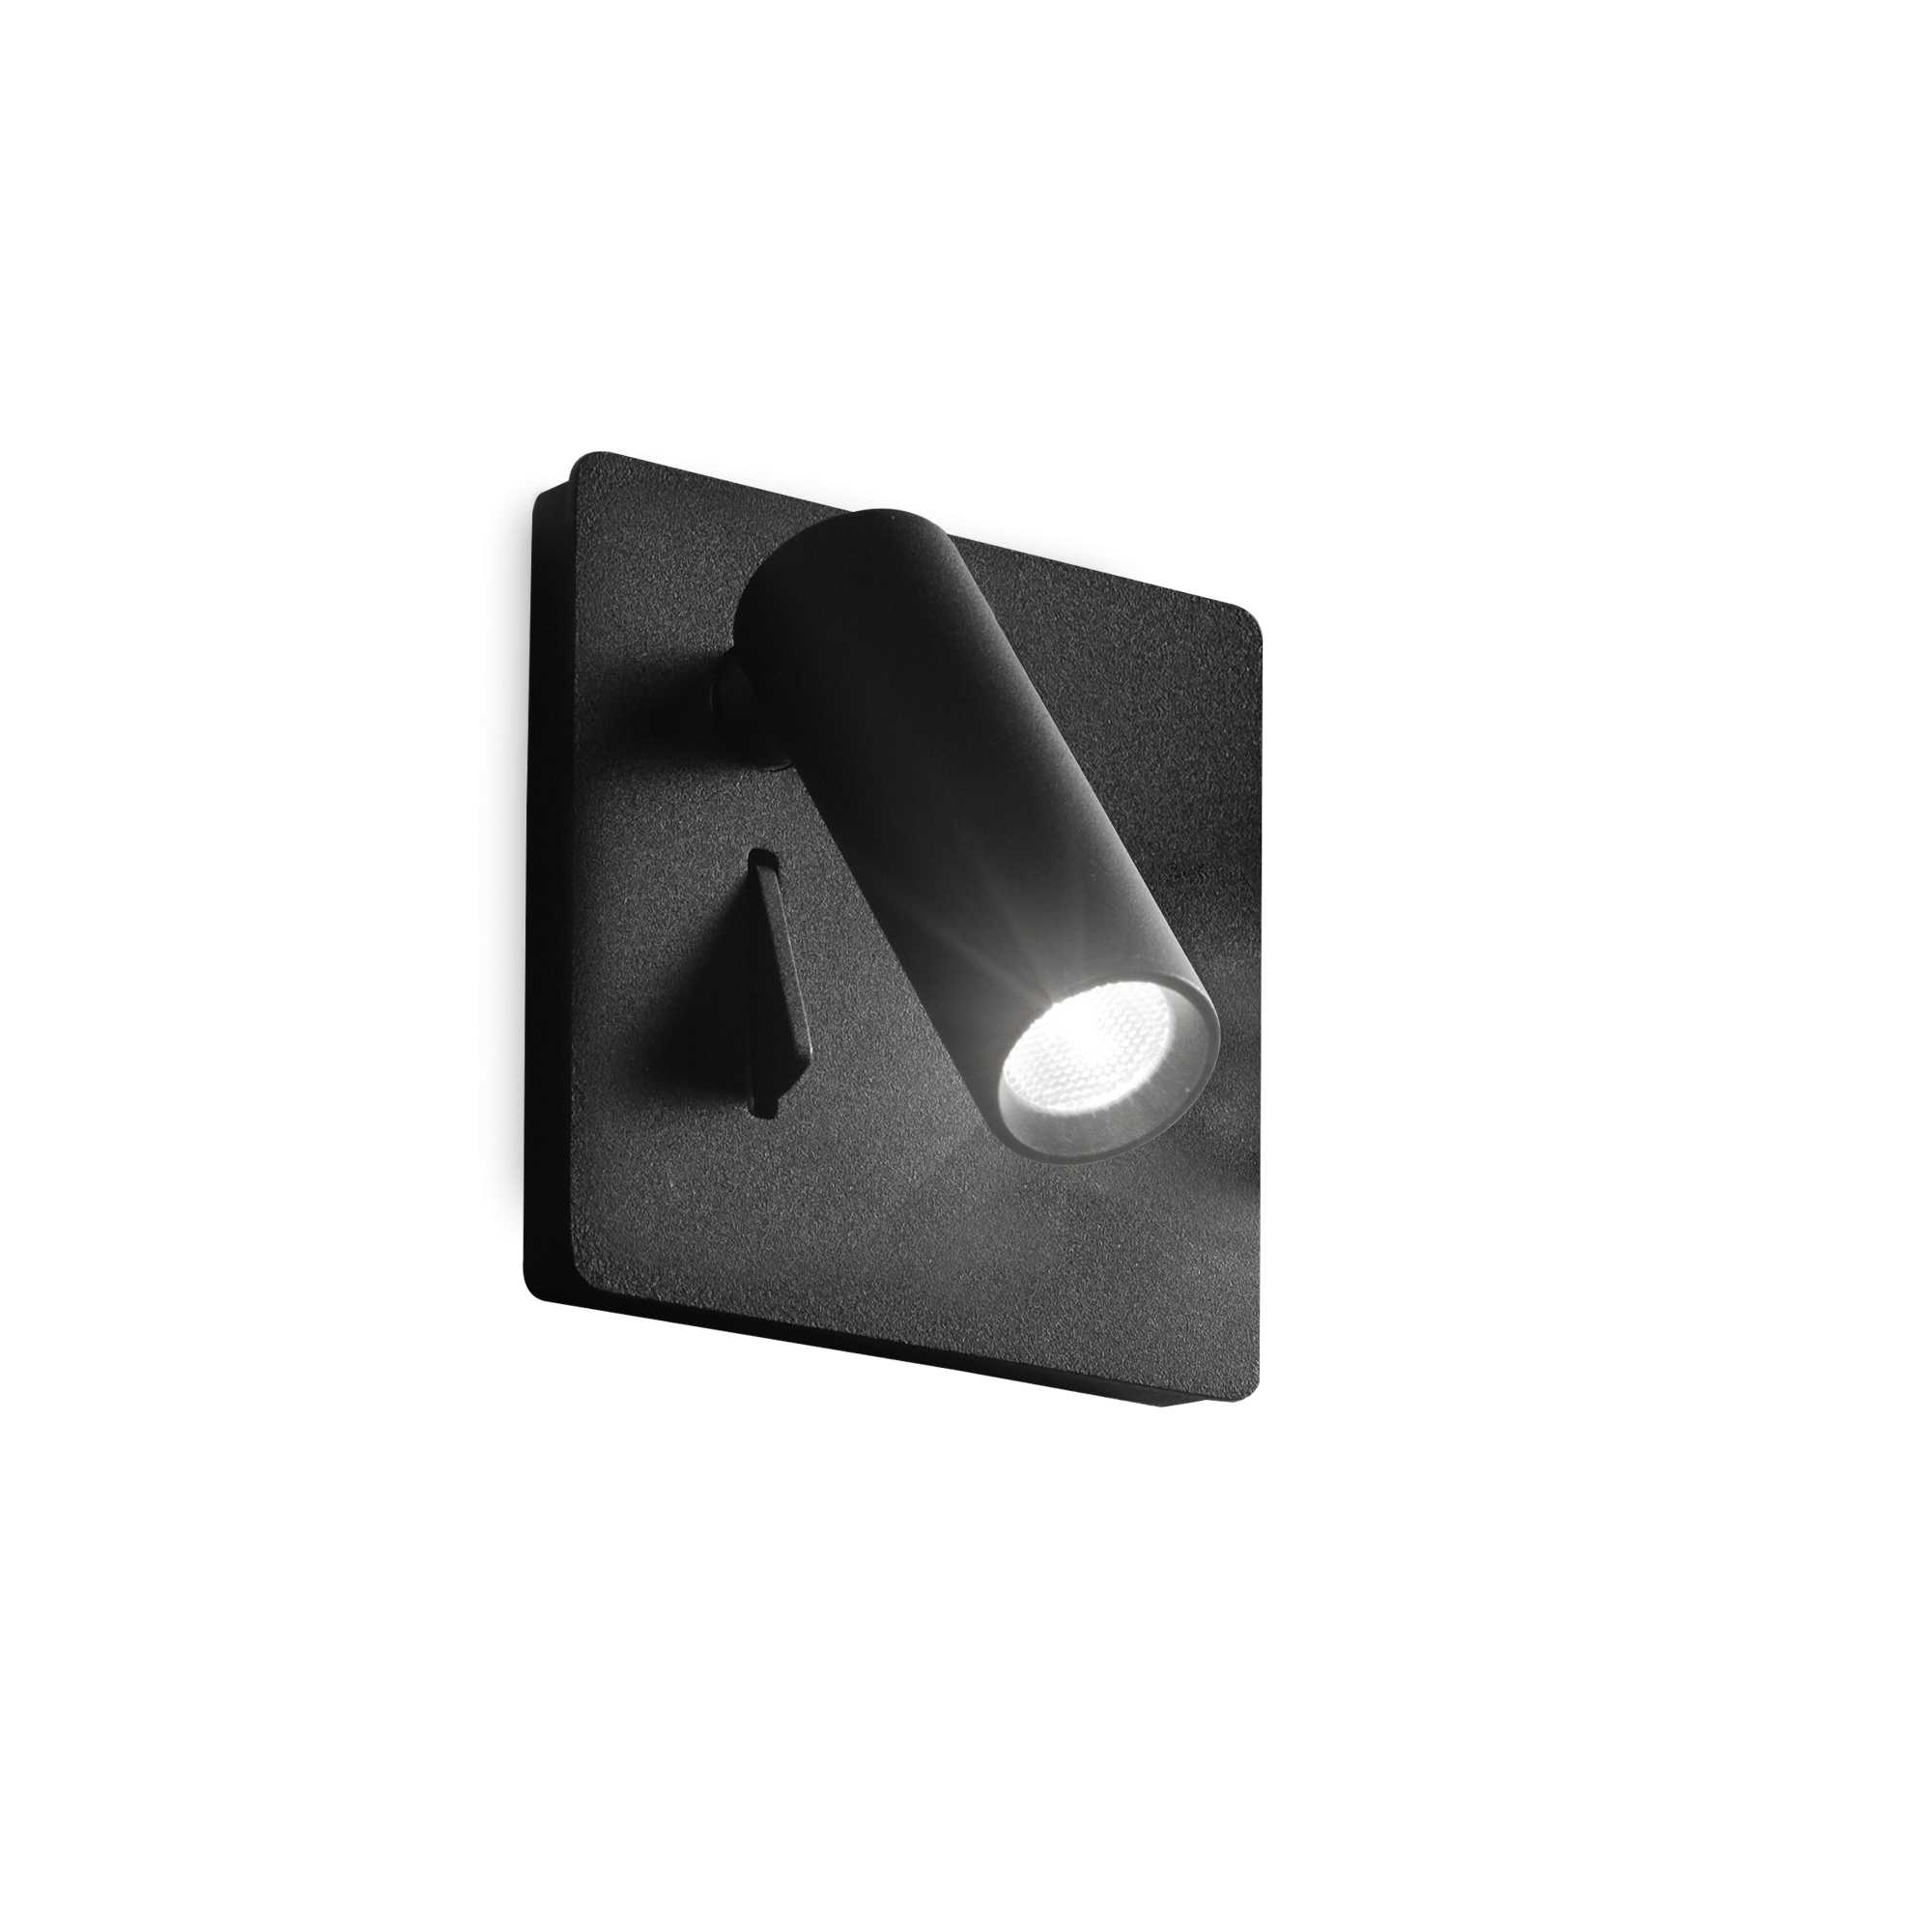 AD hotelska oprema Zidna lampa Lite ap- Crne boje slika proizvoda